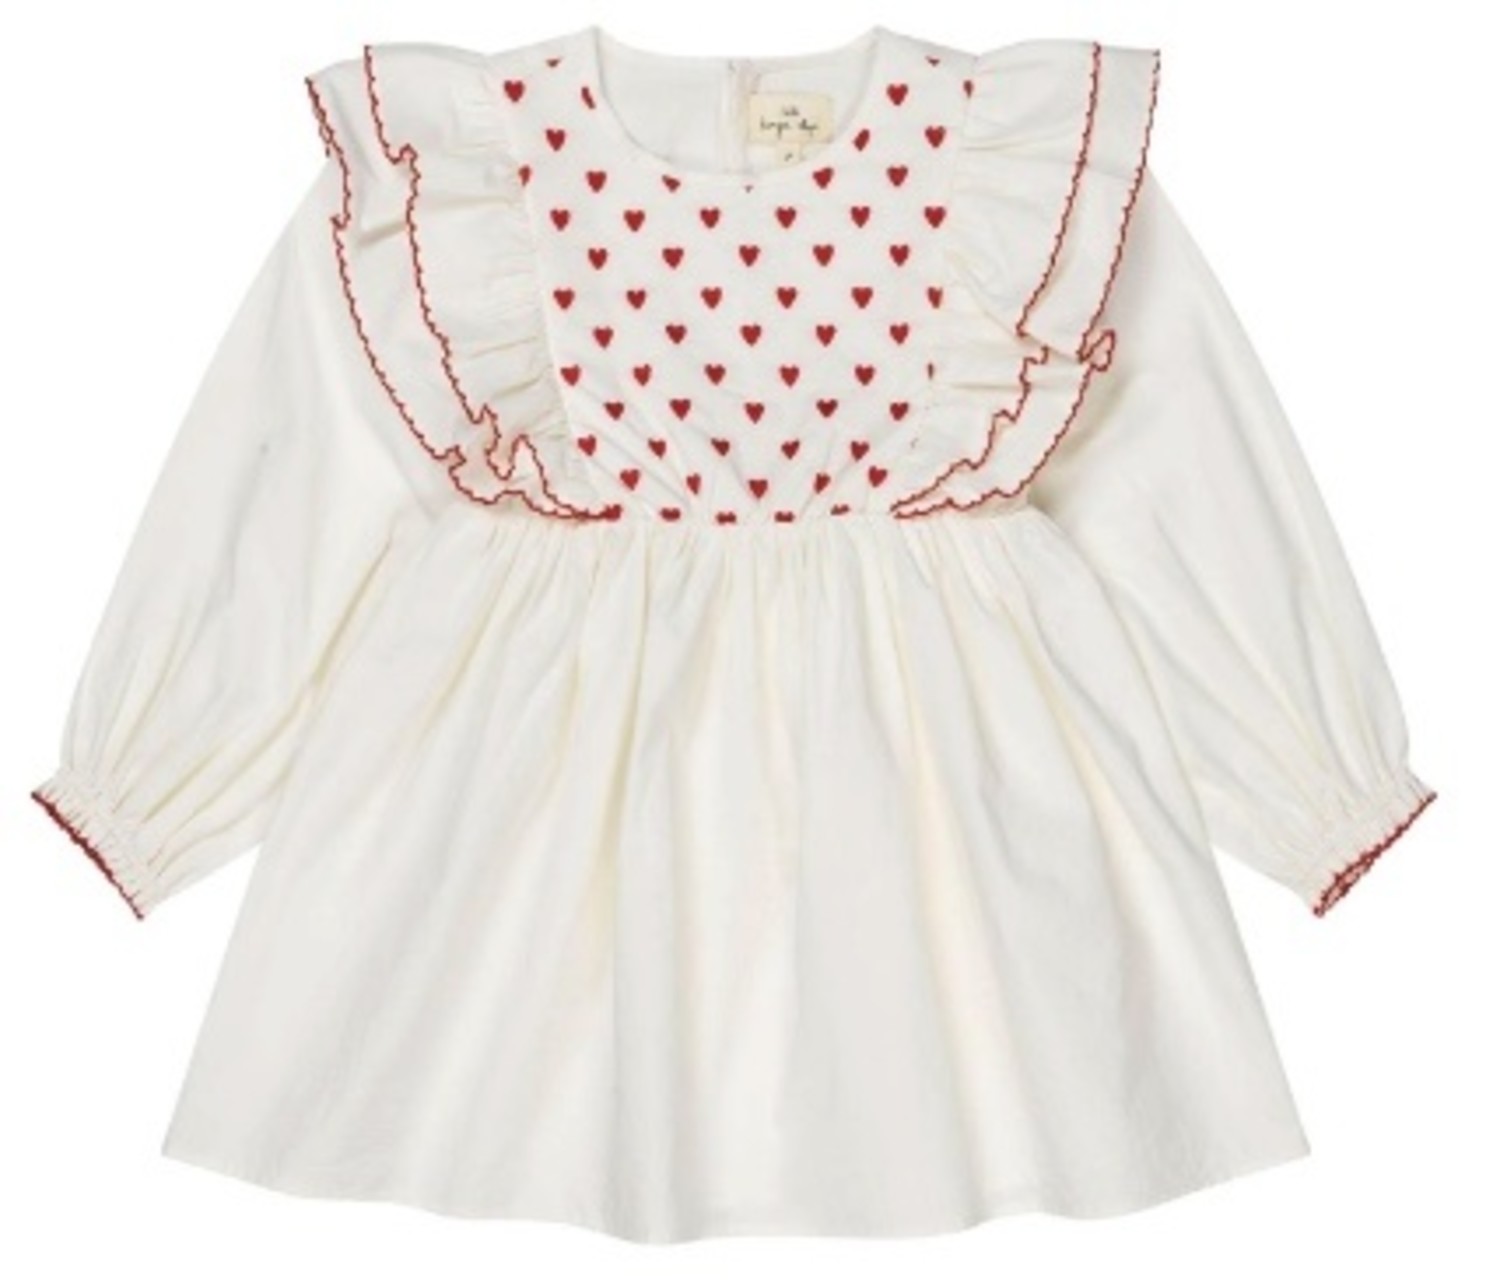 https://cdn.shoplightspeed.com/shops/616157/files/50089202/1500x4000x3/konges-slojd-konges-slojd-girls-heart-dress.jpg